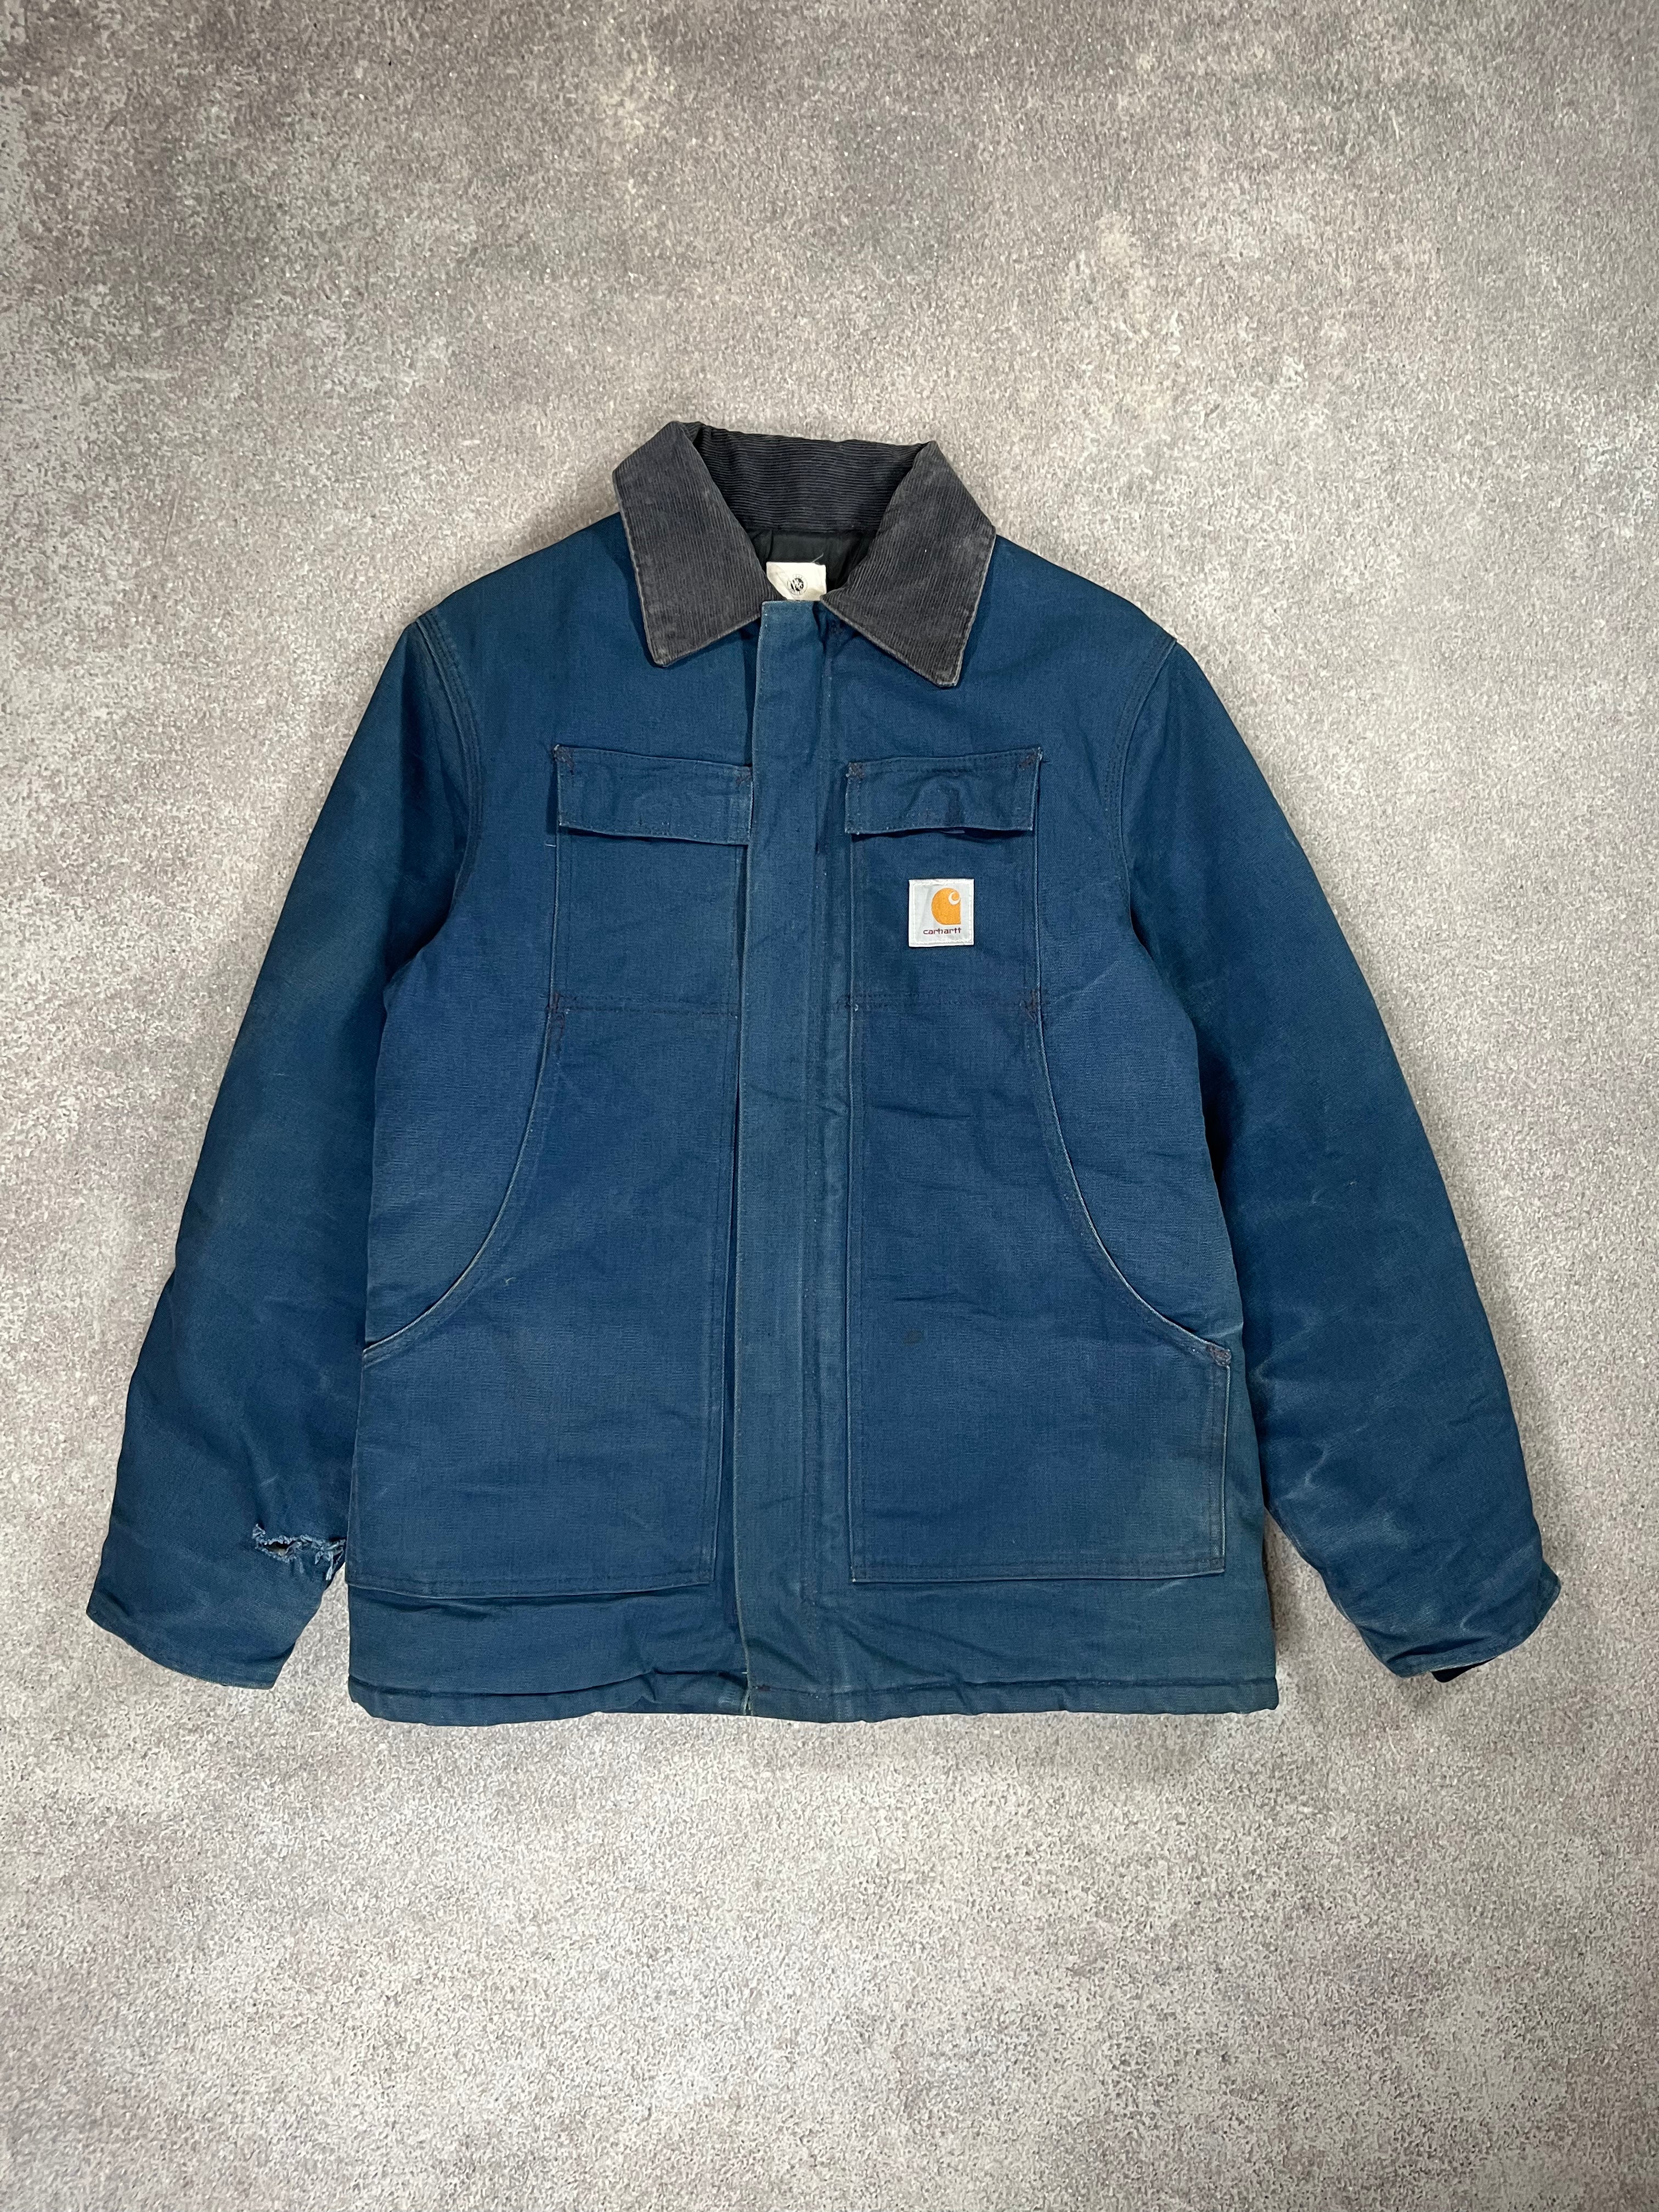 Carhartt Chore Coat Jacket Blue // Small - RHAGHOUSE VINTAGE